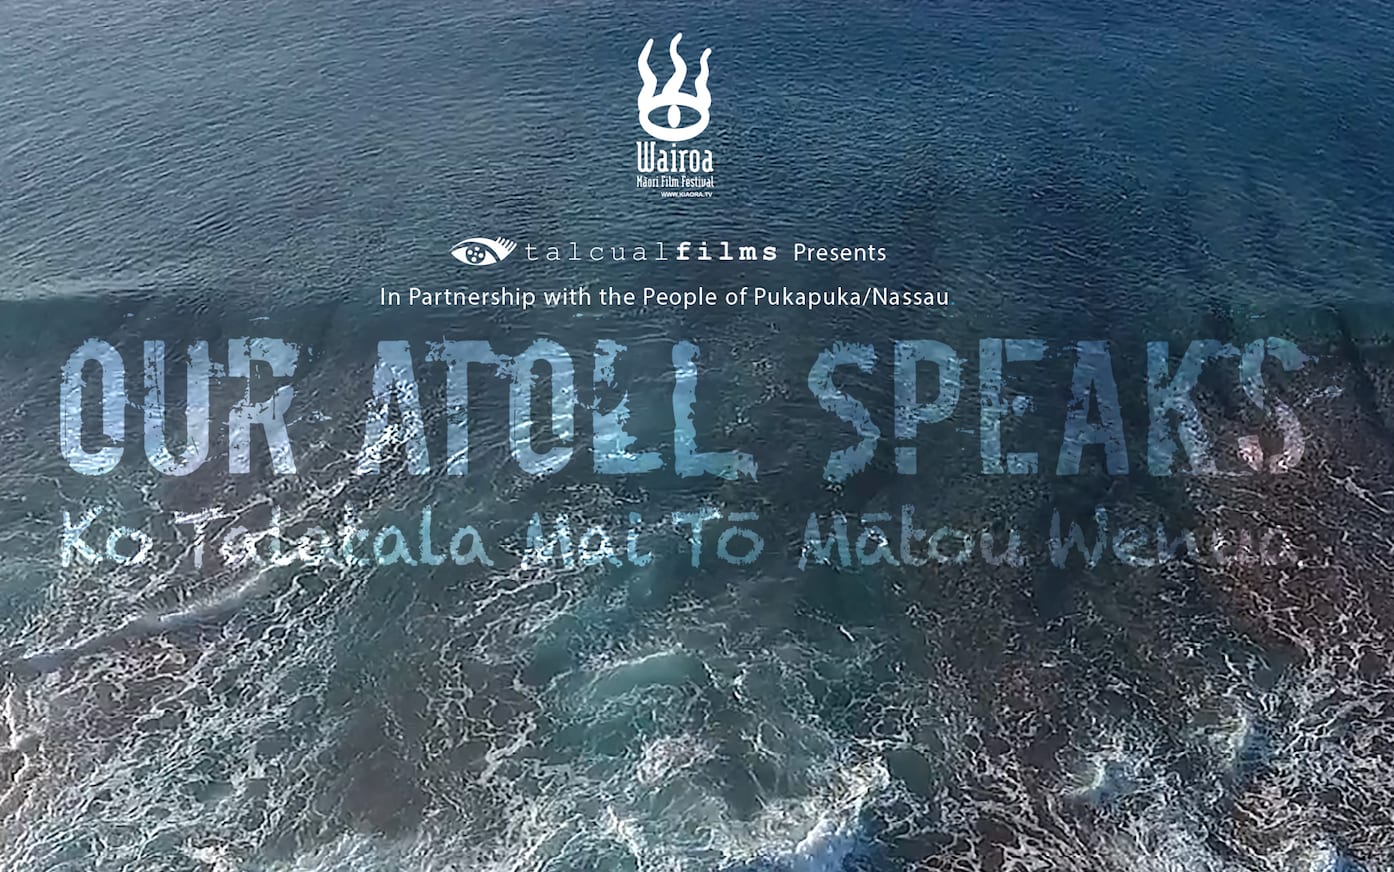 The poster for Our Atoll Speaks: Ko Talatala Mai Tō Mātou Wenua